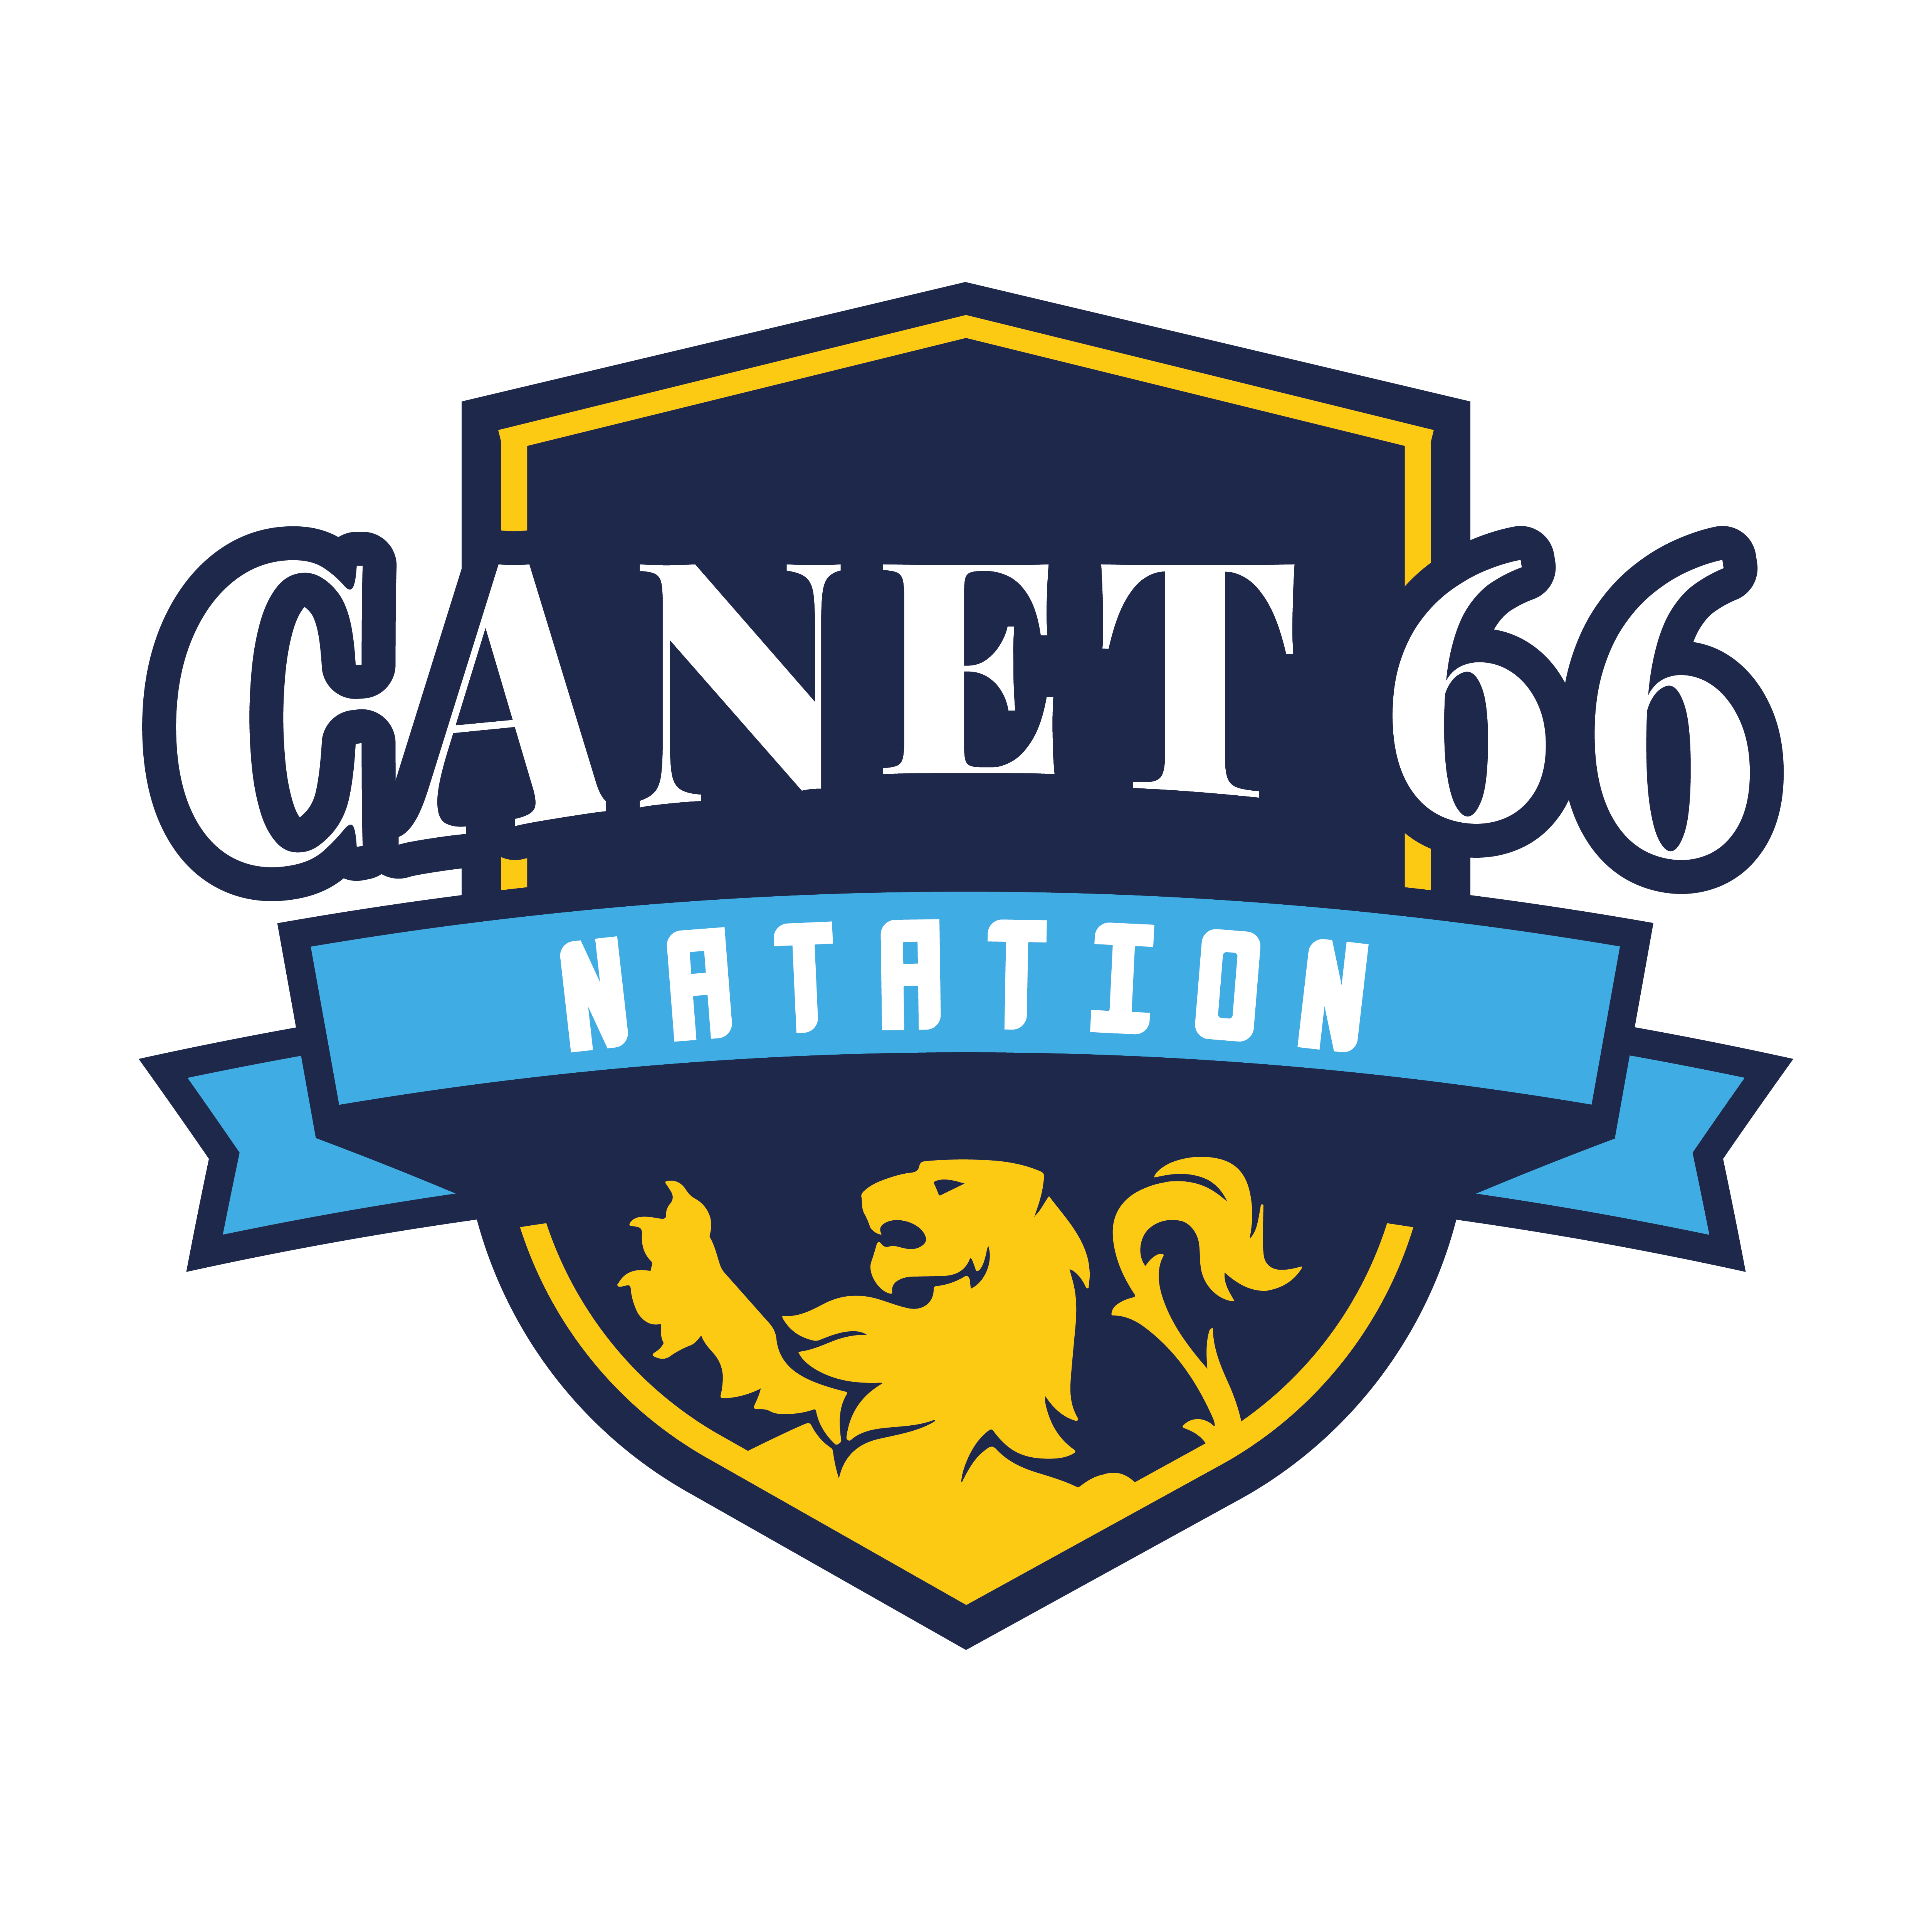 Canet 66 Natation - Poussin 2